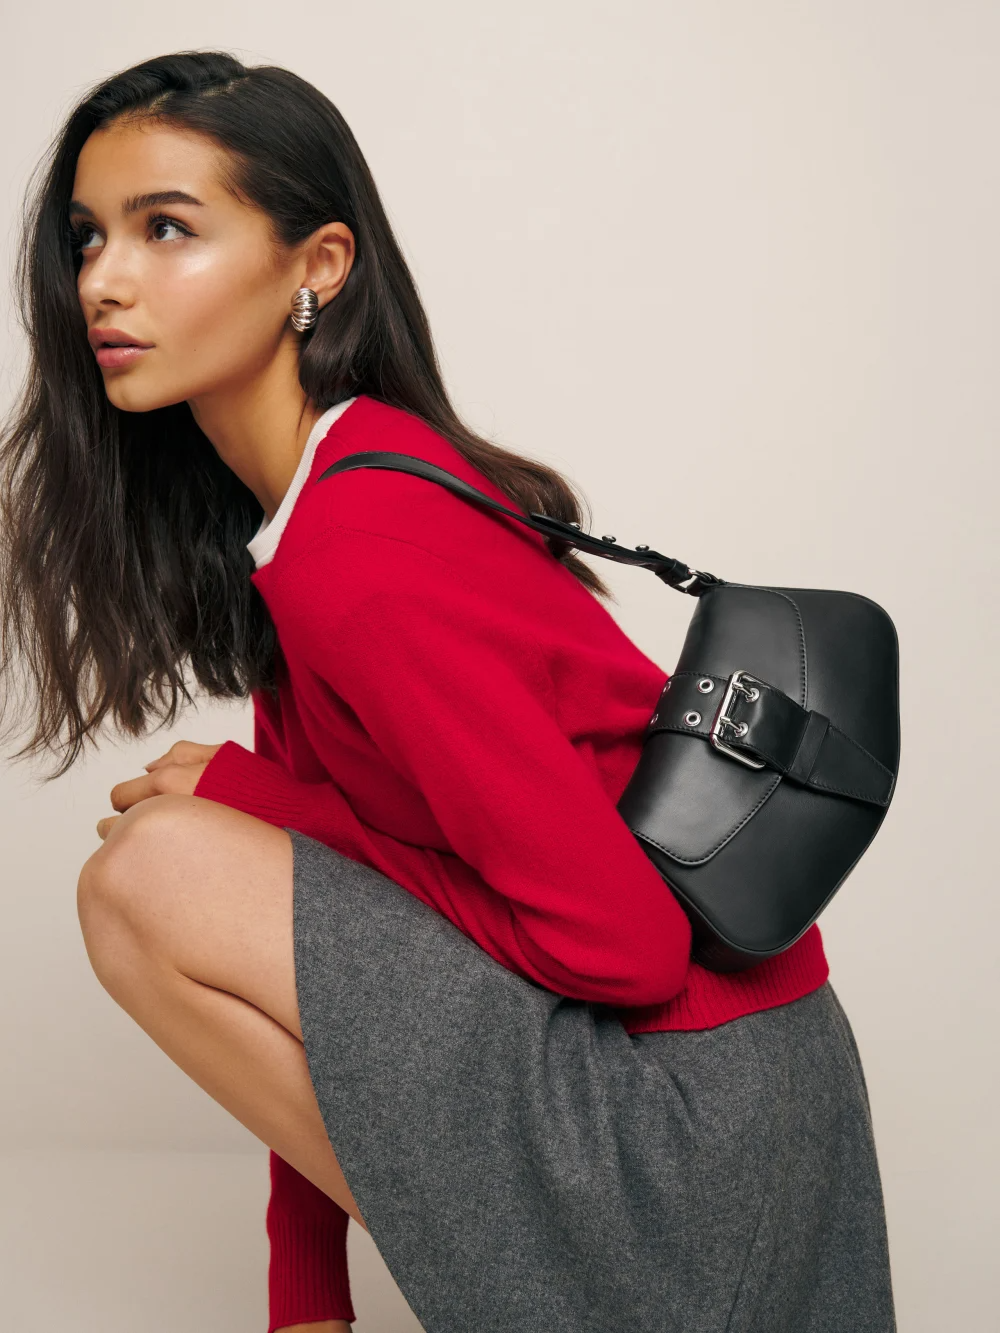 How To Spot A Fake Handbag, According To The Experts | British Vogue